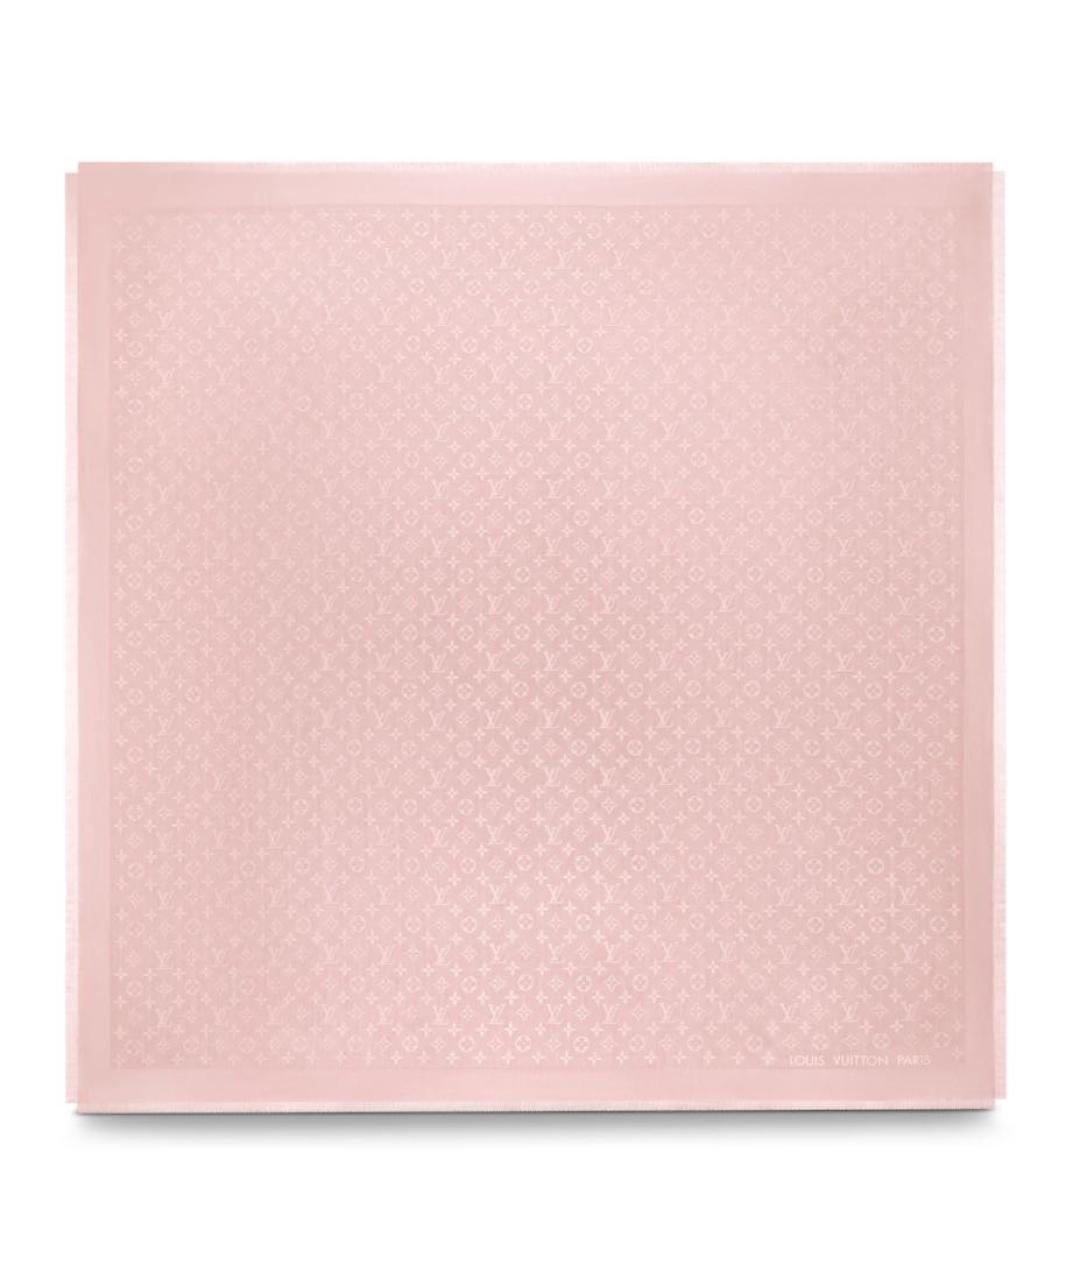 LOUIS VUITTON PRE-OWNED Розовый шелковый платок, фото 1